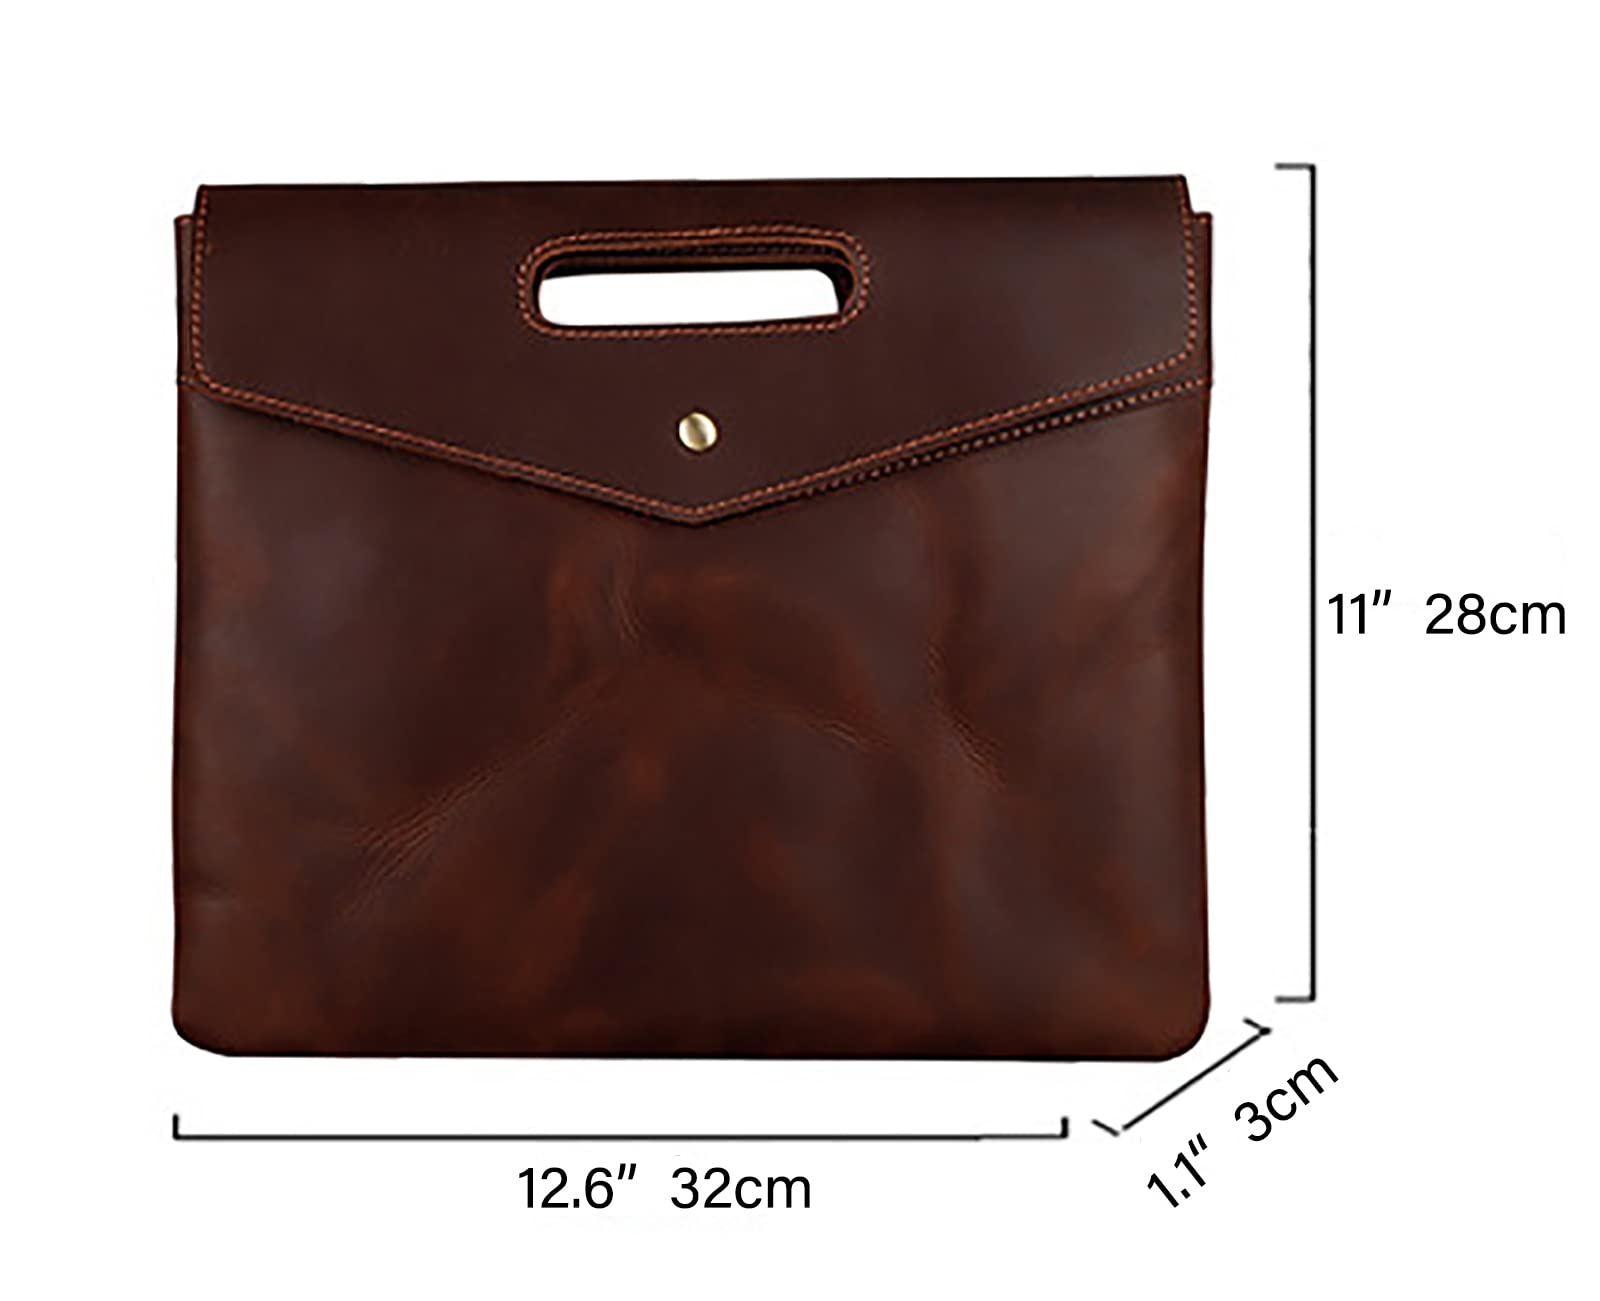 Leather Men's Briefcase Clutch Bag, Retro Business Envelope Bag, Men's Bag for Mac Book Air/Pro & Tablet, Document Bag